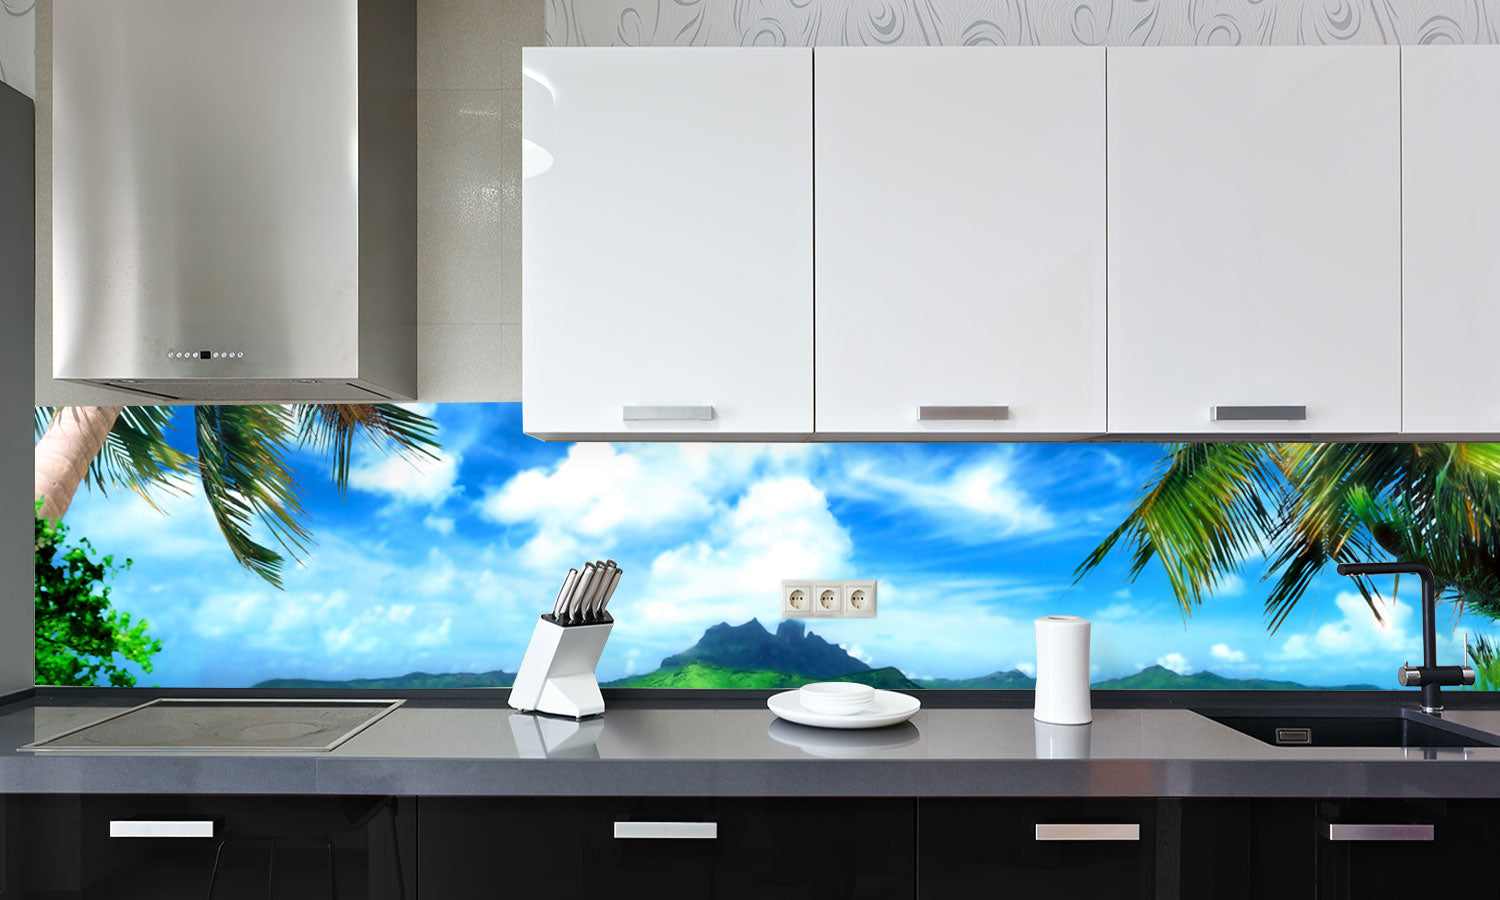 Paneli za kuhinje Magical coast -  Stakleni / PVC ploče / Pleksiglas -  sa printom za kuhinju, Zidne obloge PKU398